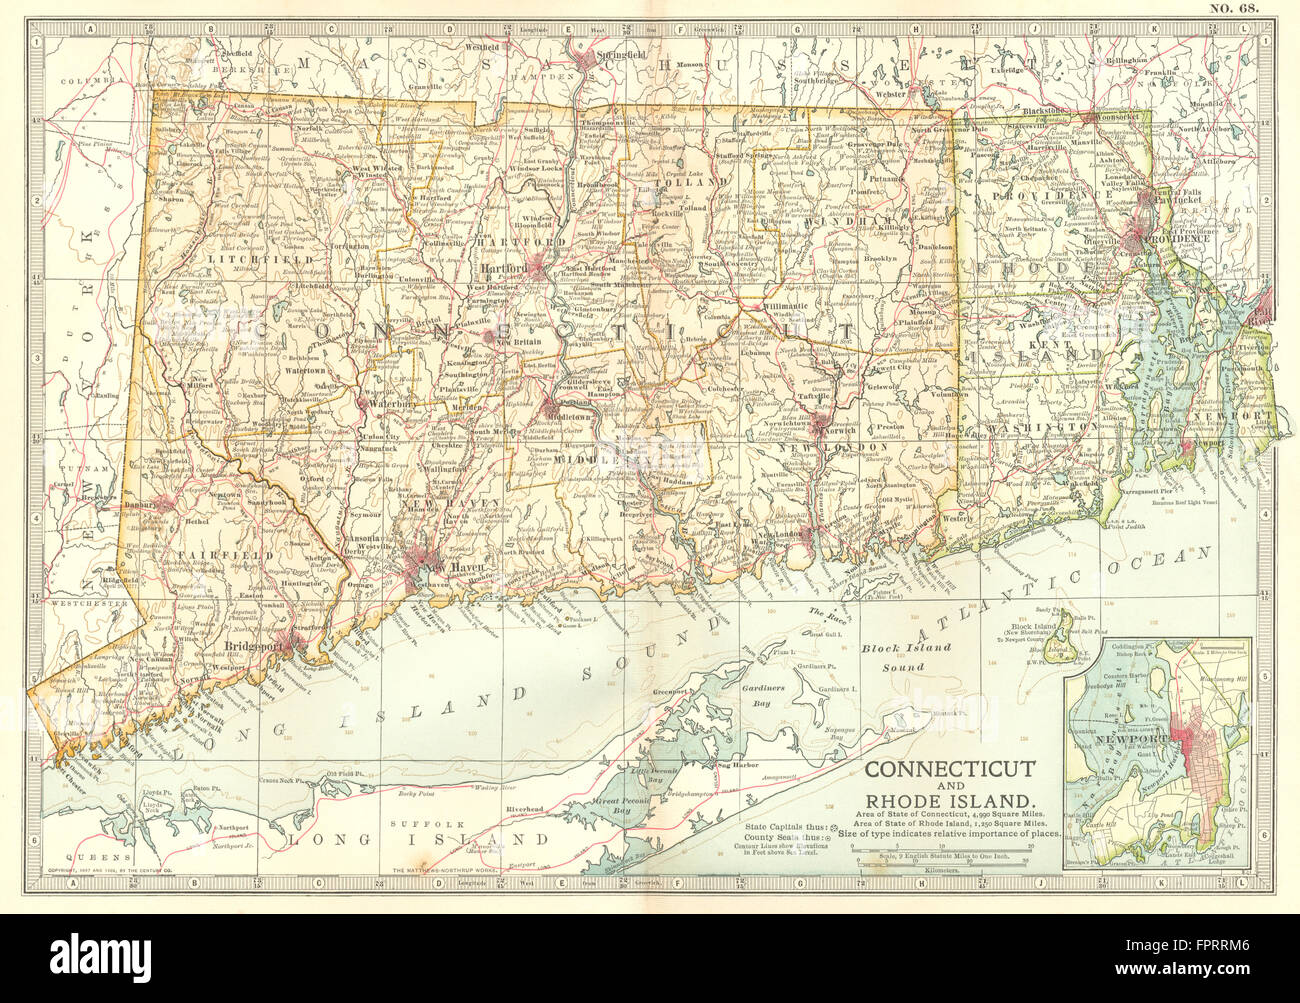 CONNECTICUT RHODE ISLAND: Newport. Shows 1637 1675 1777 battles/dates, 1903 map Stock Photo